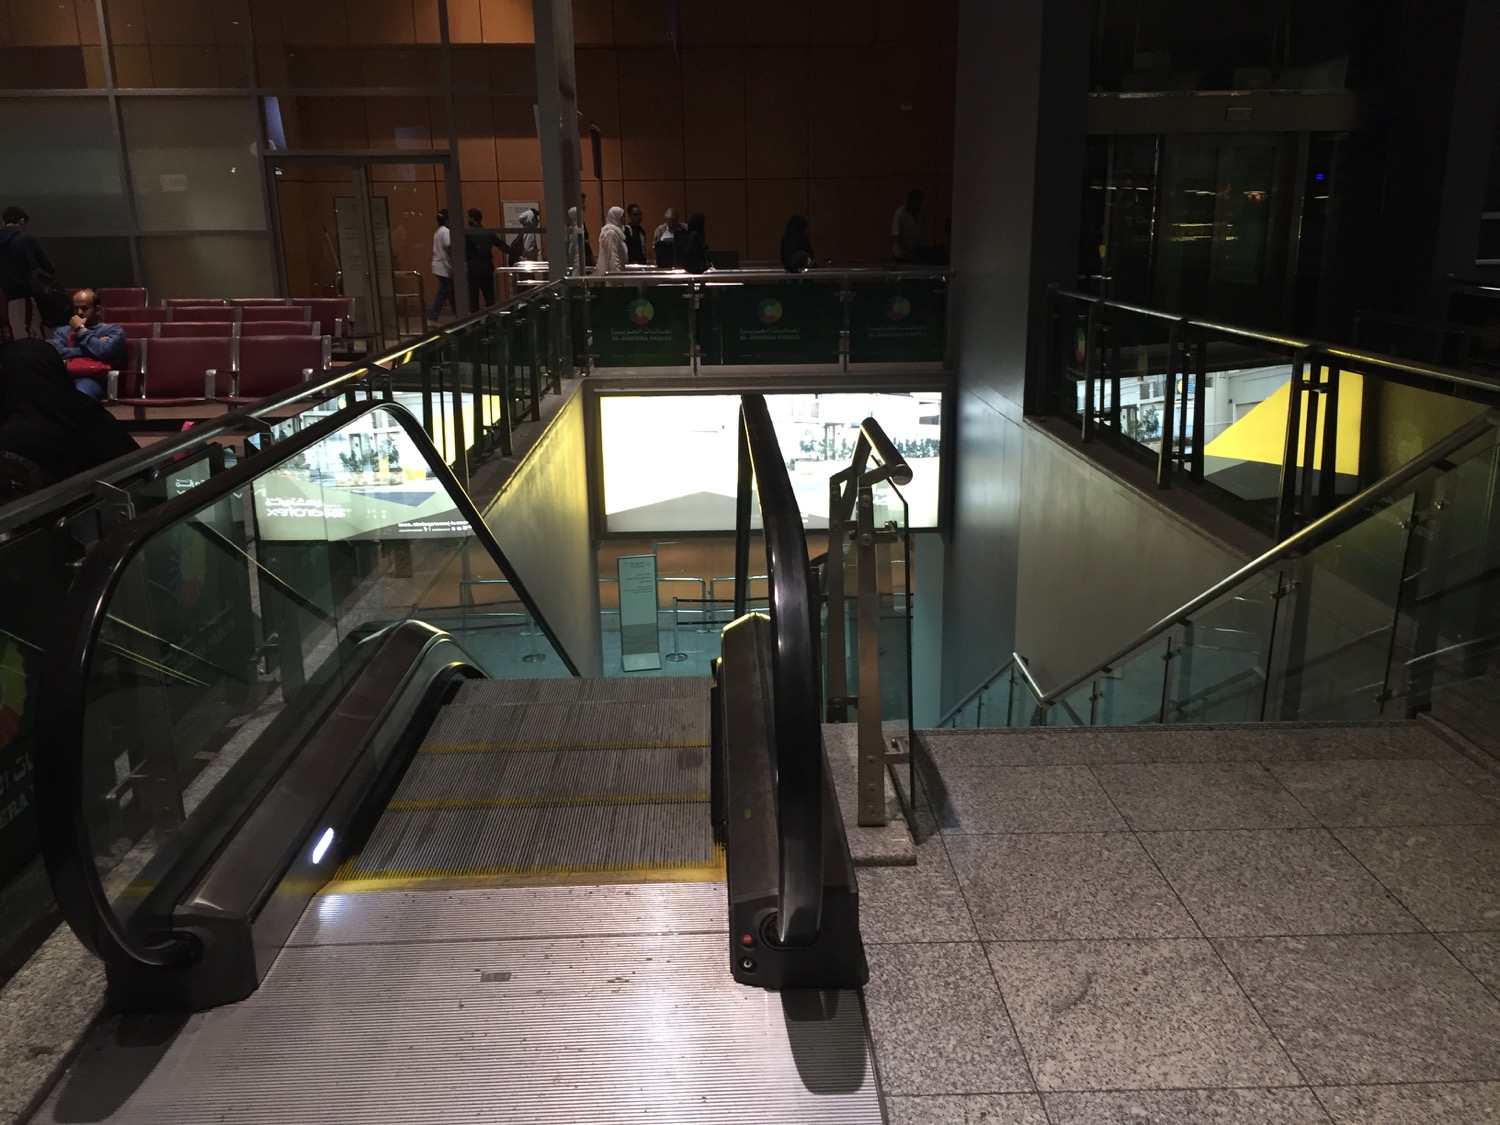 escalator inside the building